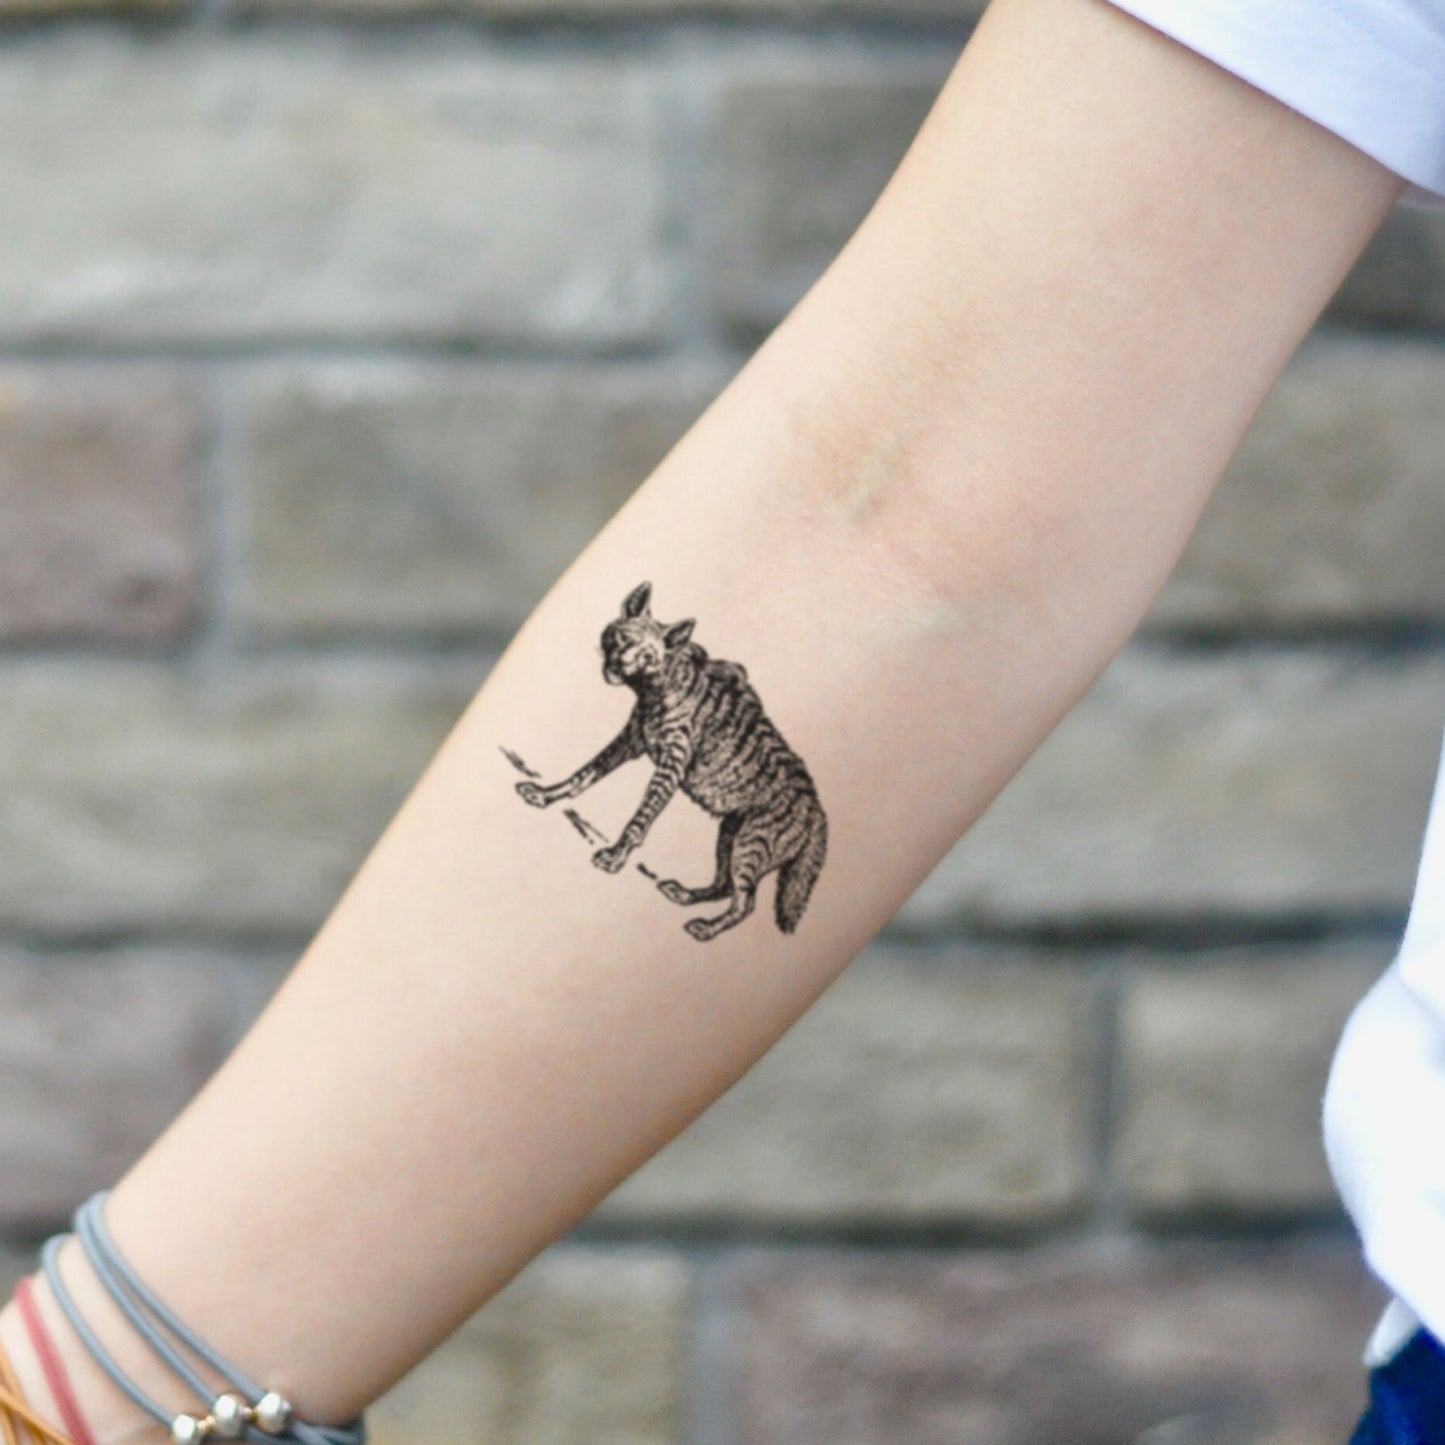 fake small hyena animal temporary tattoo sticker design idea on inner arm